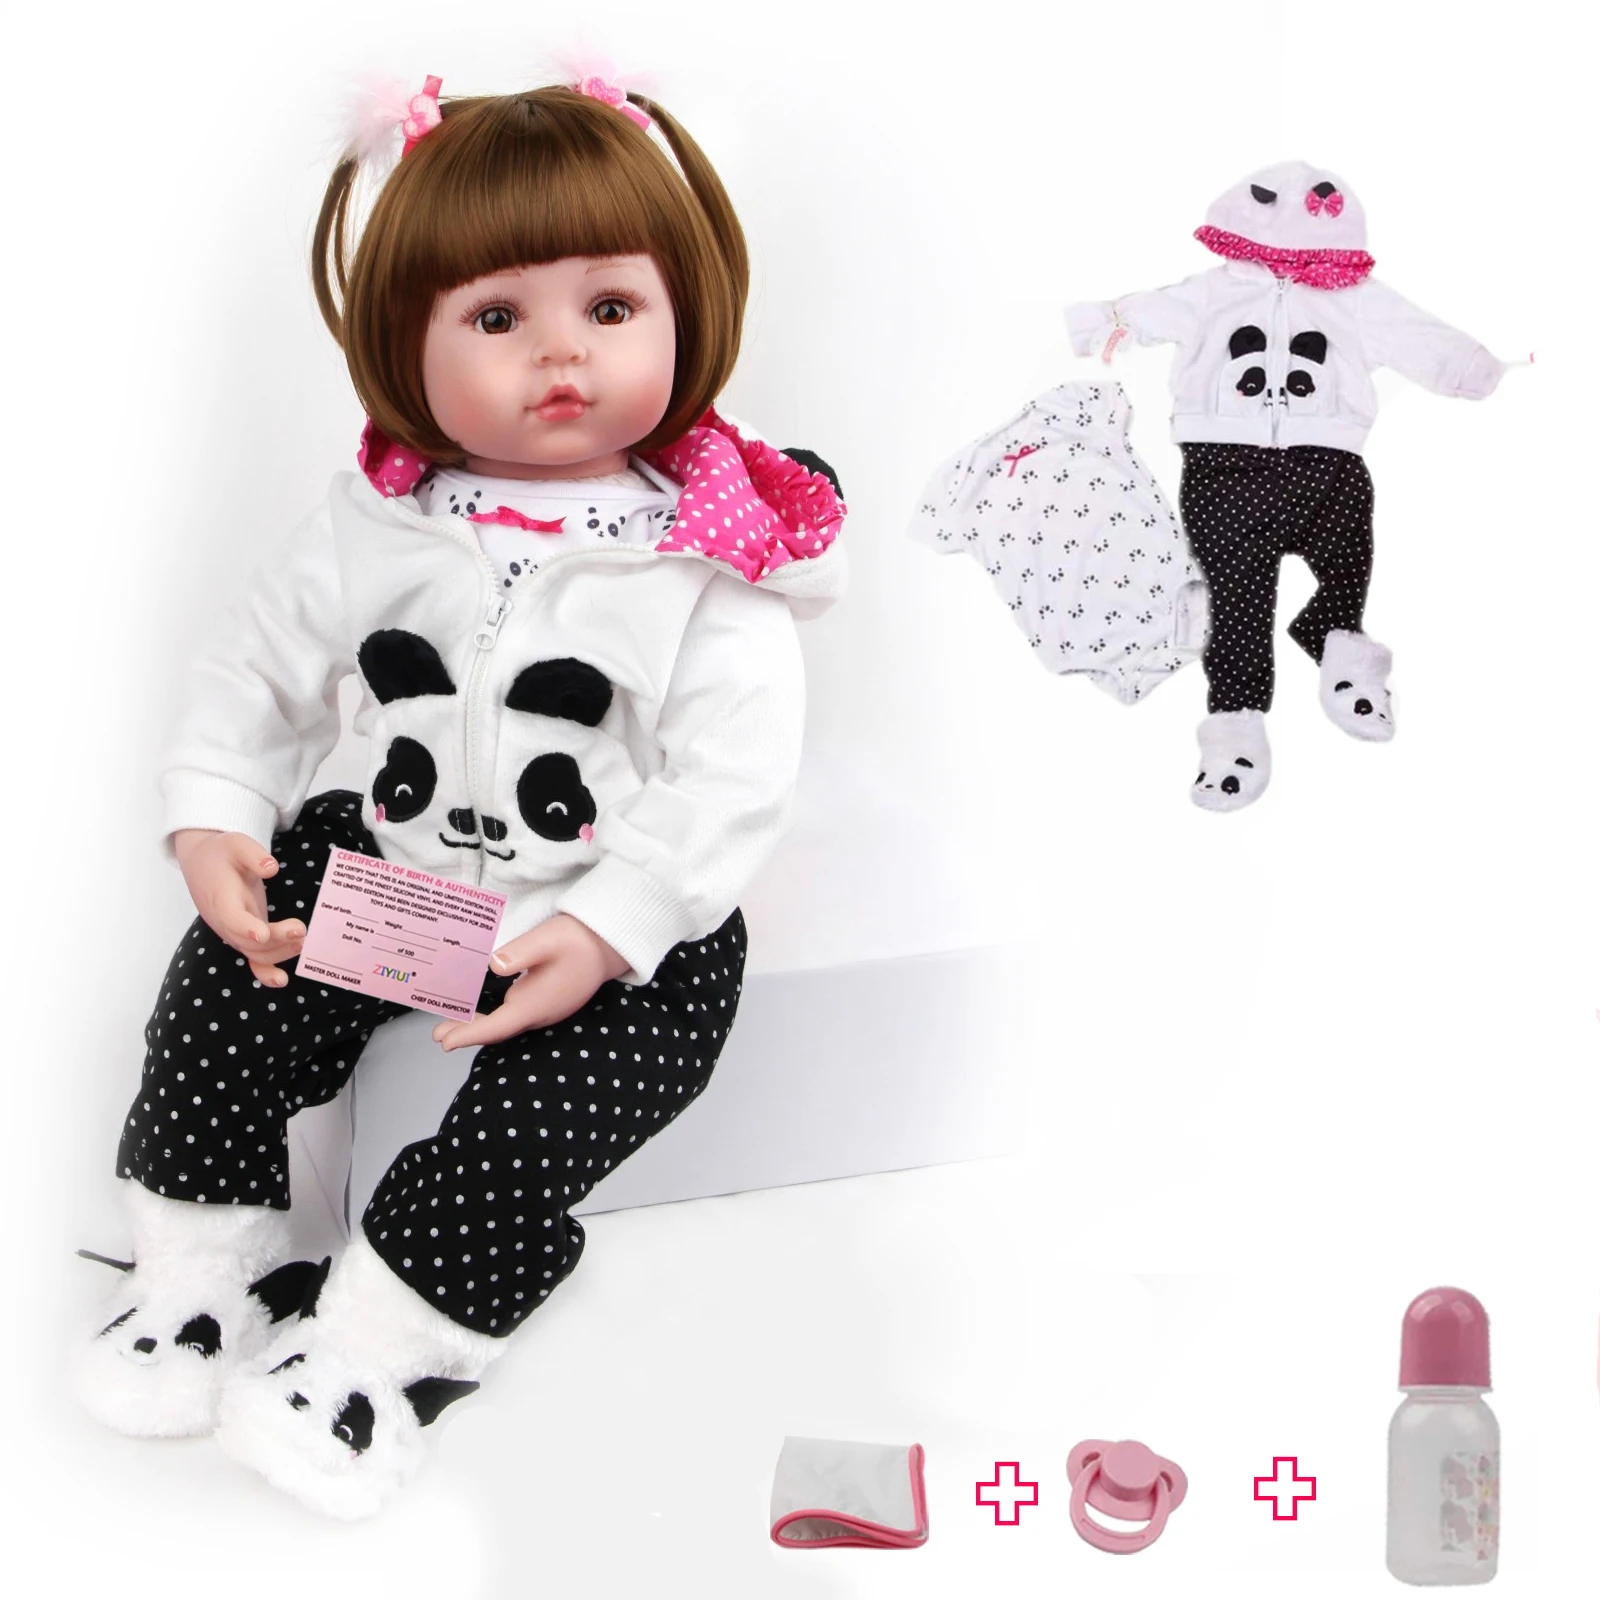 

ZIYIUI 22 Inch 55cm Realistic Handmade Soft Silicone Vinyl Panda Clothes Brown Eyes Reborn Baby Doll Cute Girl Toy Xmas Gift